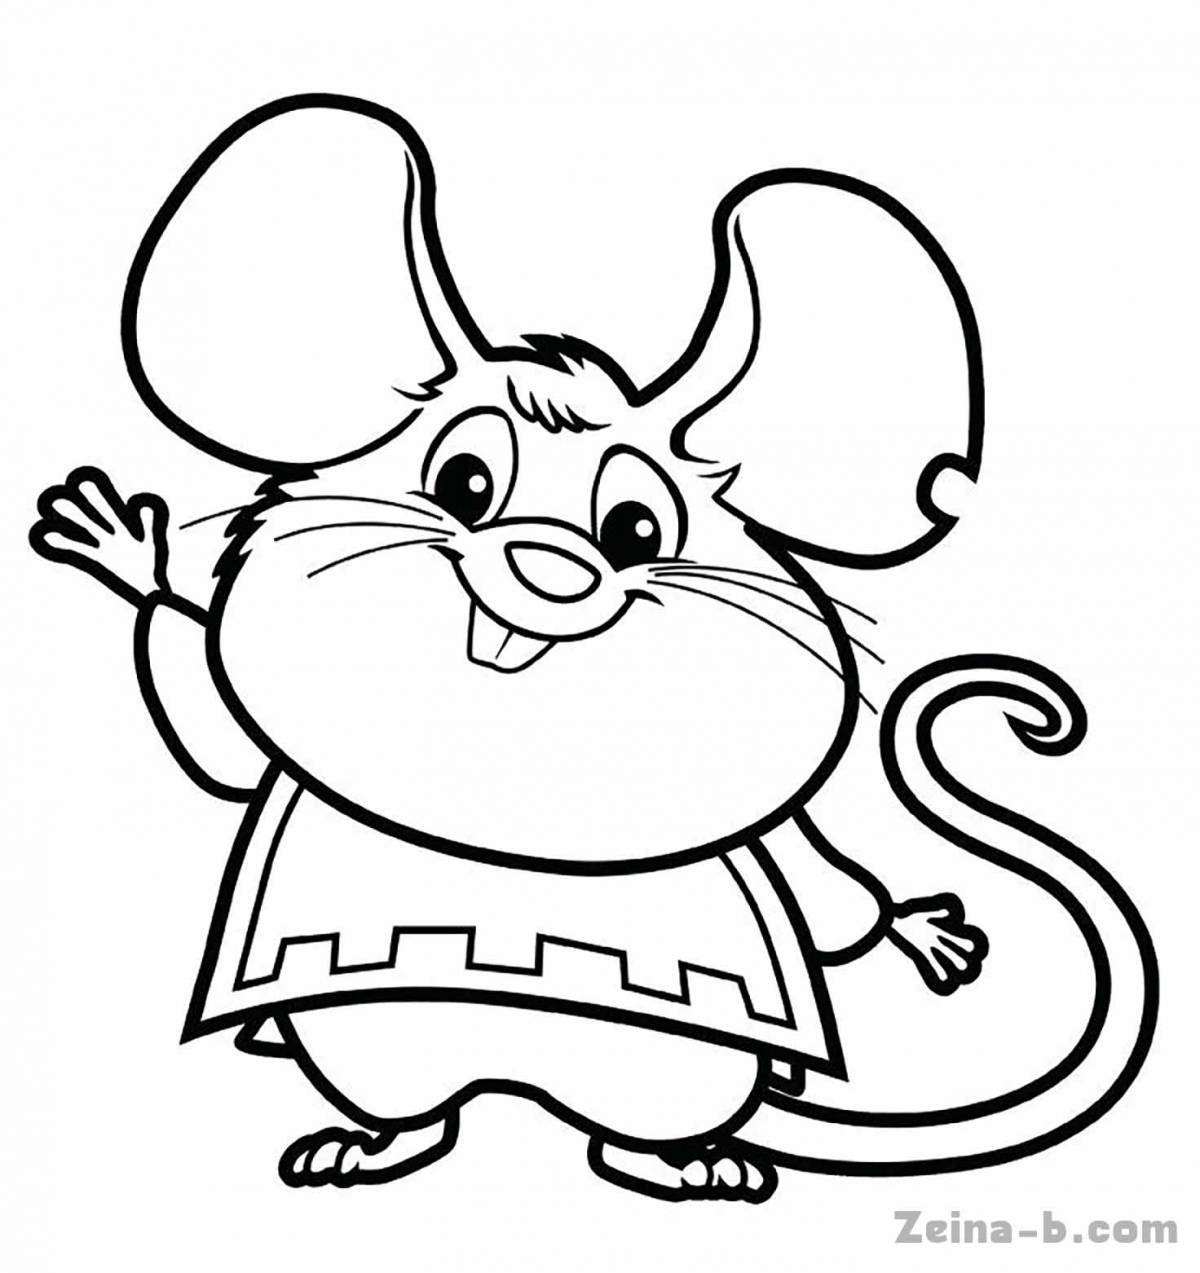 Раскраски splendid mouse для детей